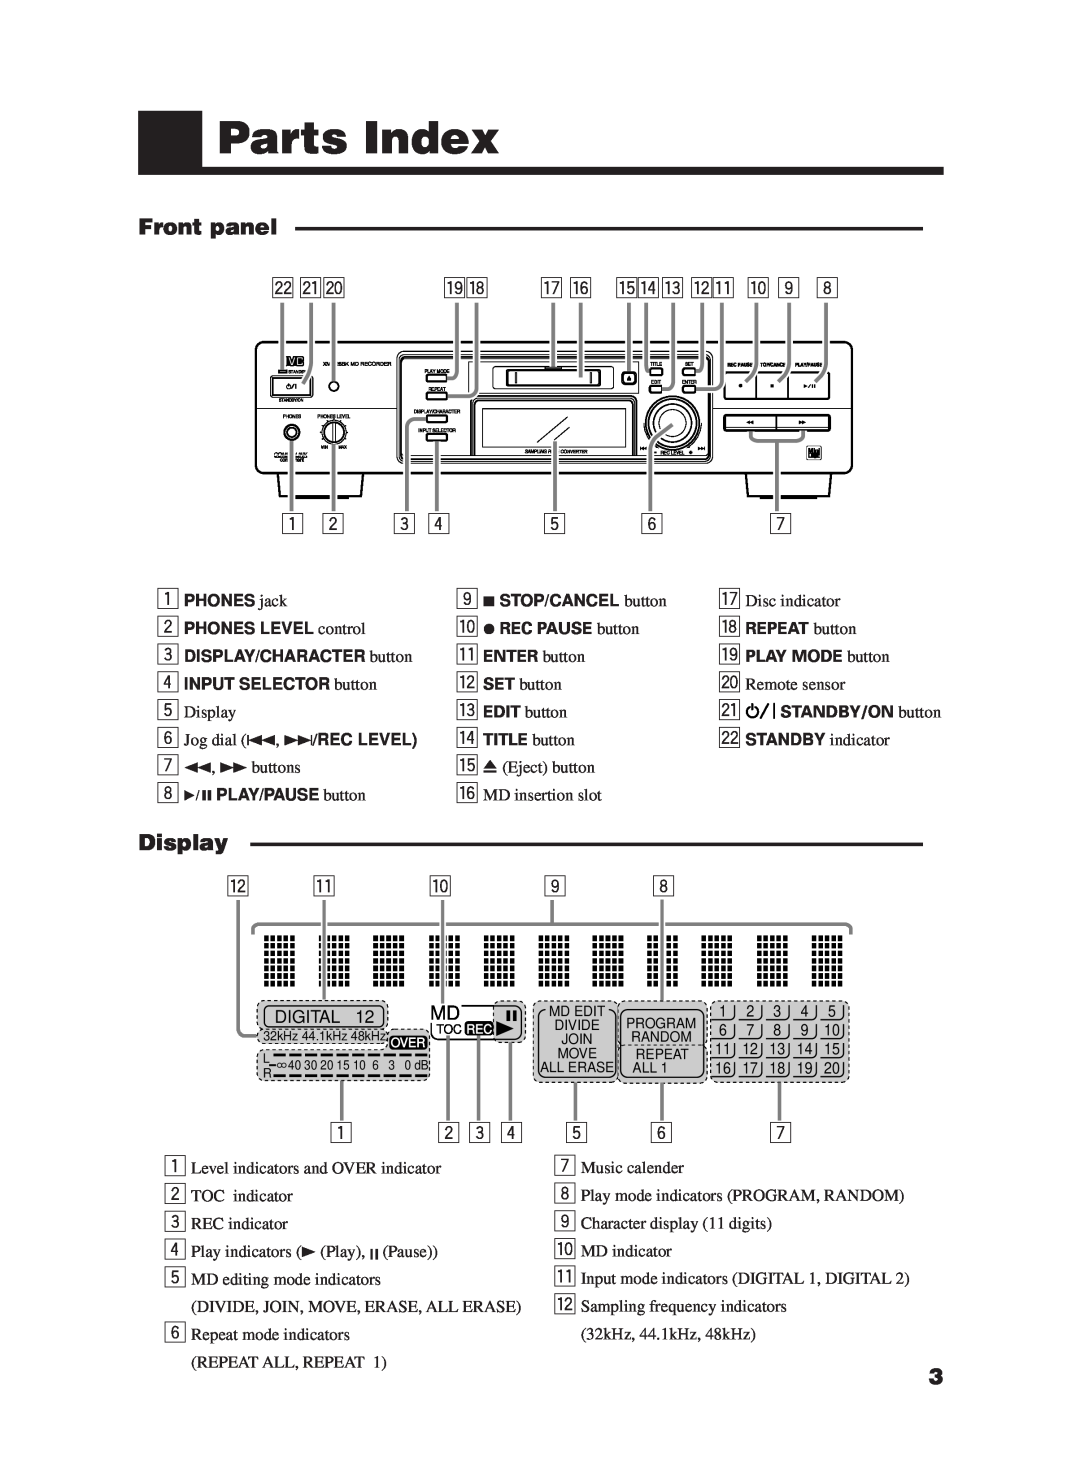 JVC XM-228BK manual Parts Index, Front panel, Display 